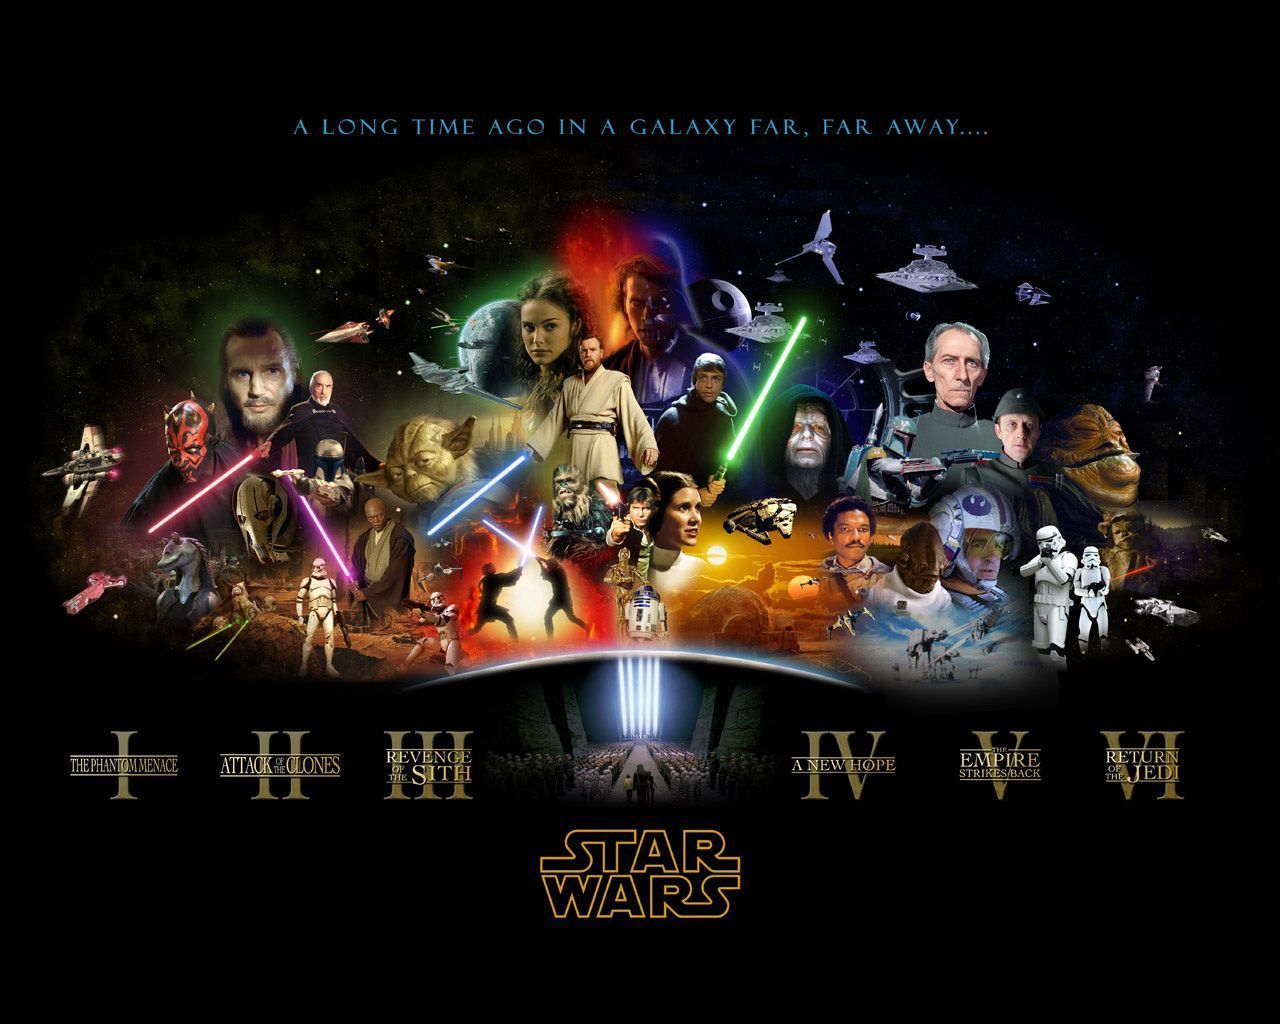 Top Ten Star Wars Wallpaper [Lists] ~ The Geek Twins